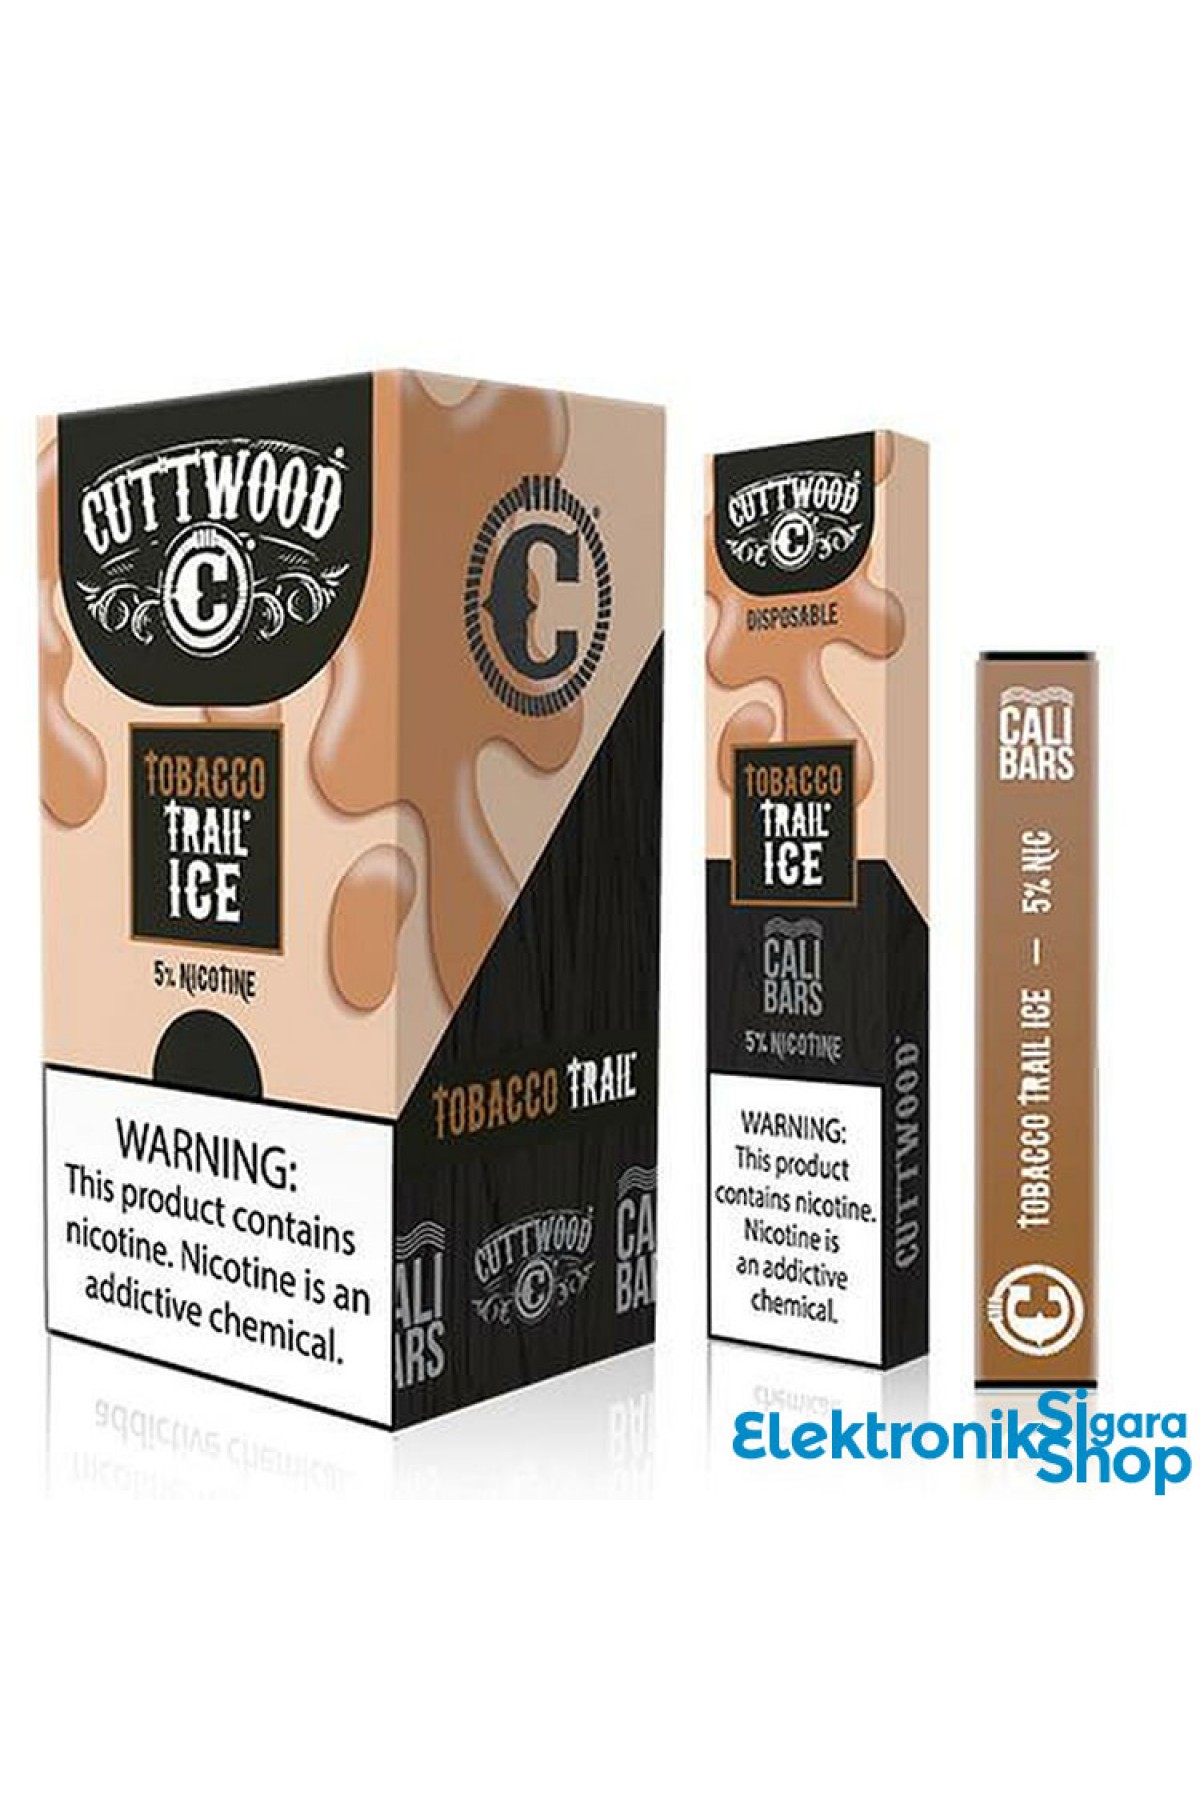 Tobacco Trail Ice Cuttwood x Cali Bars (300 Puff) 280mAh